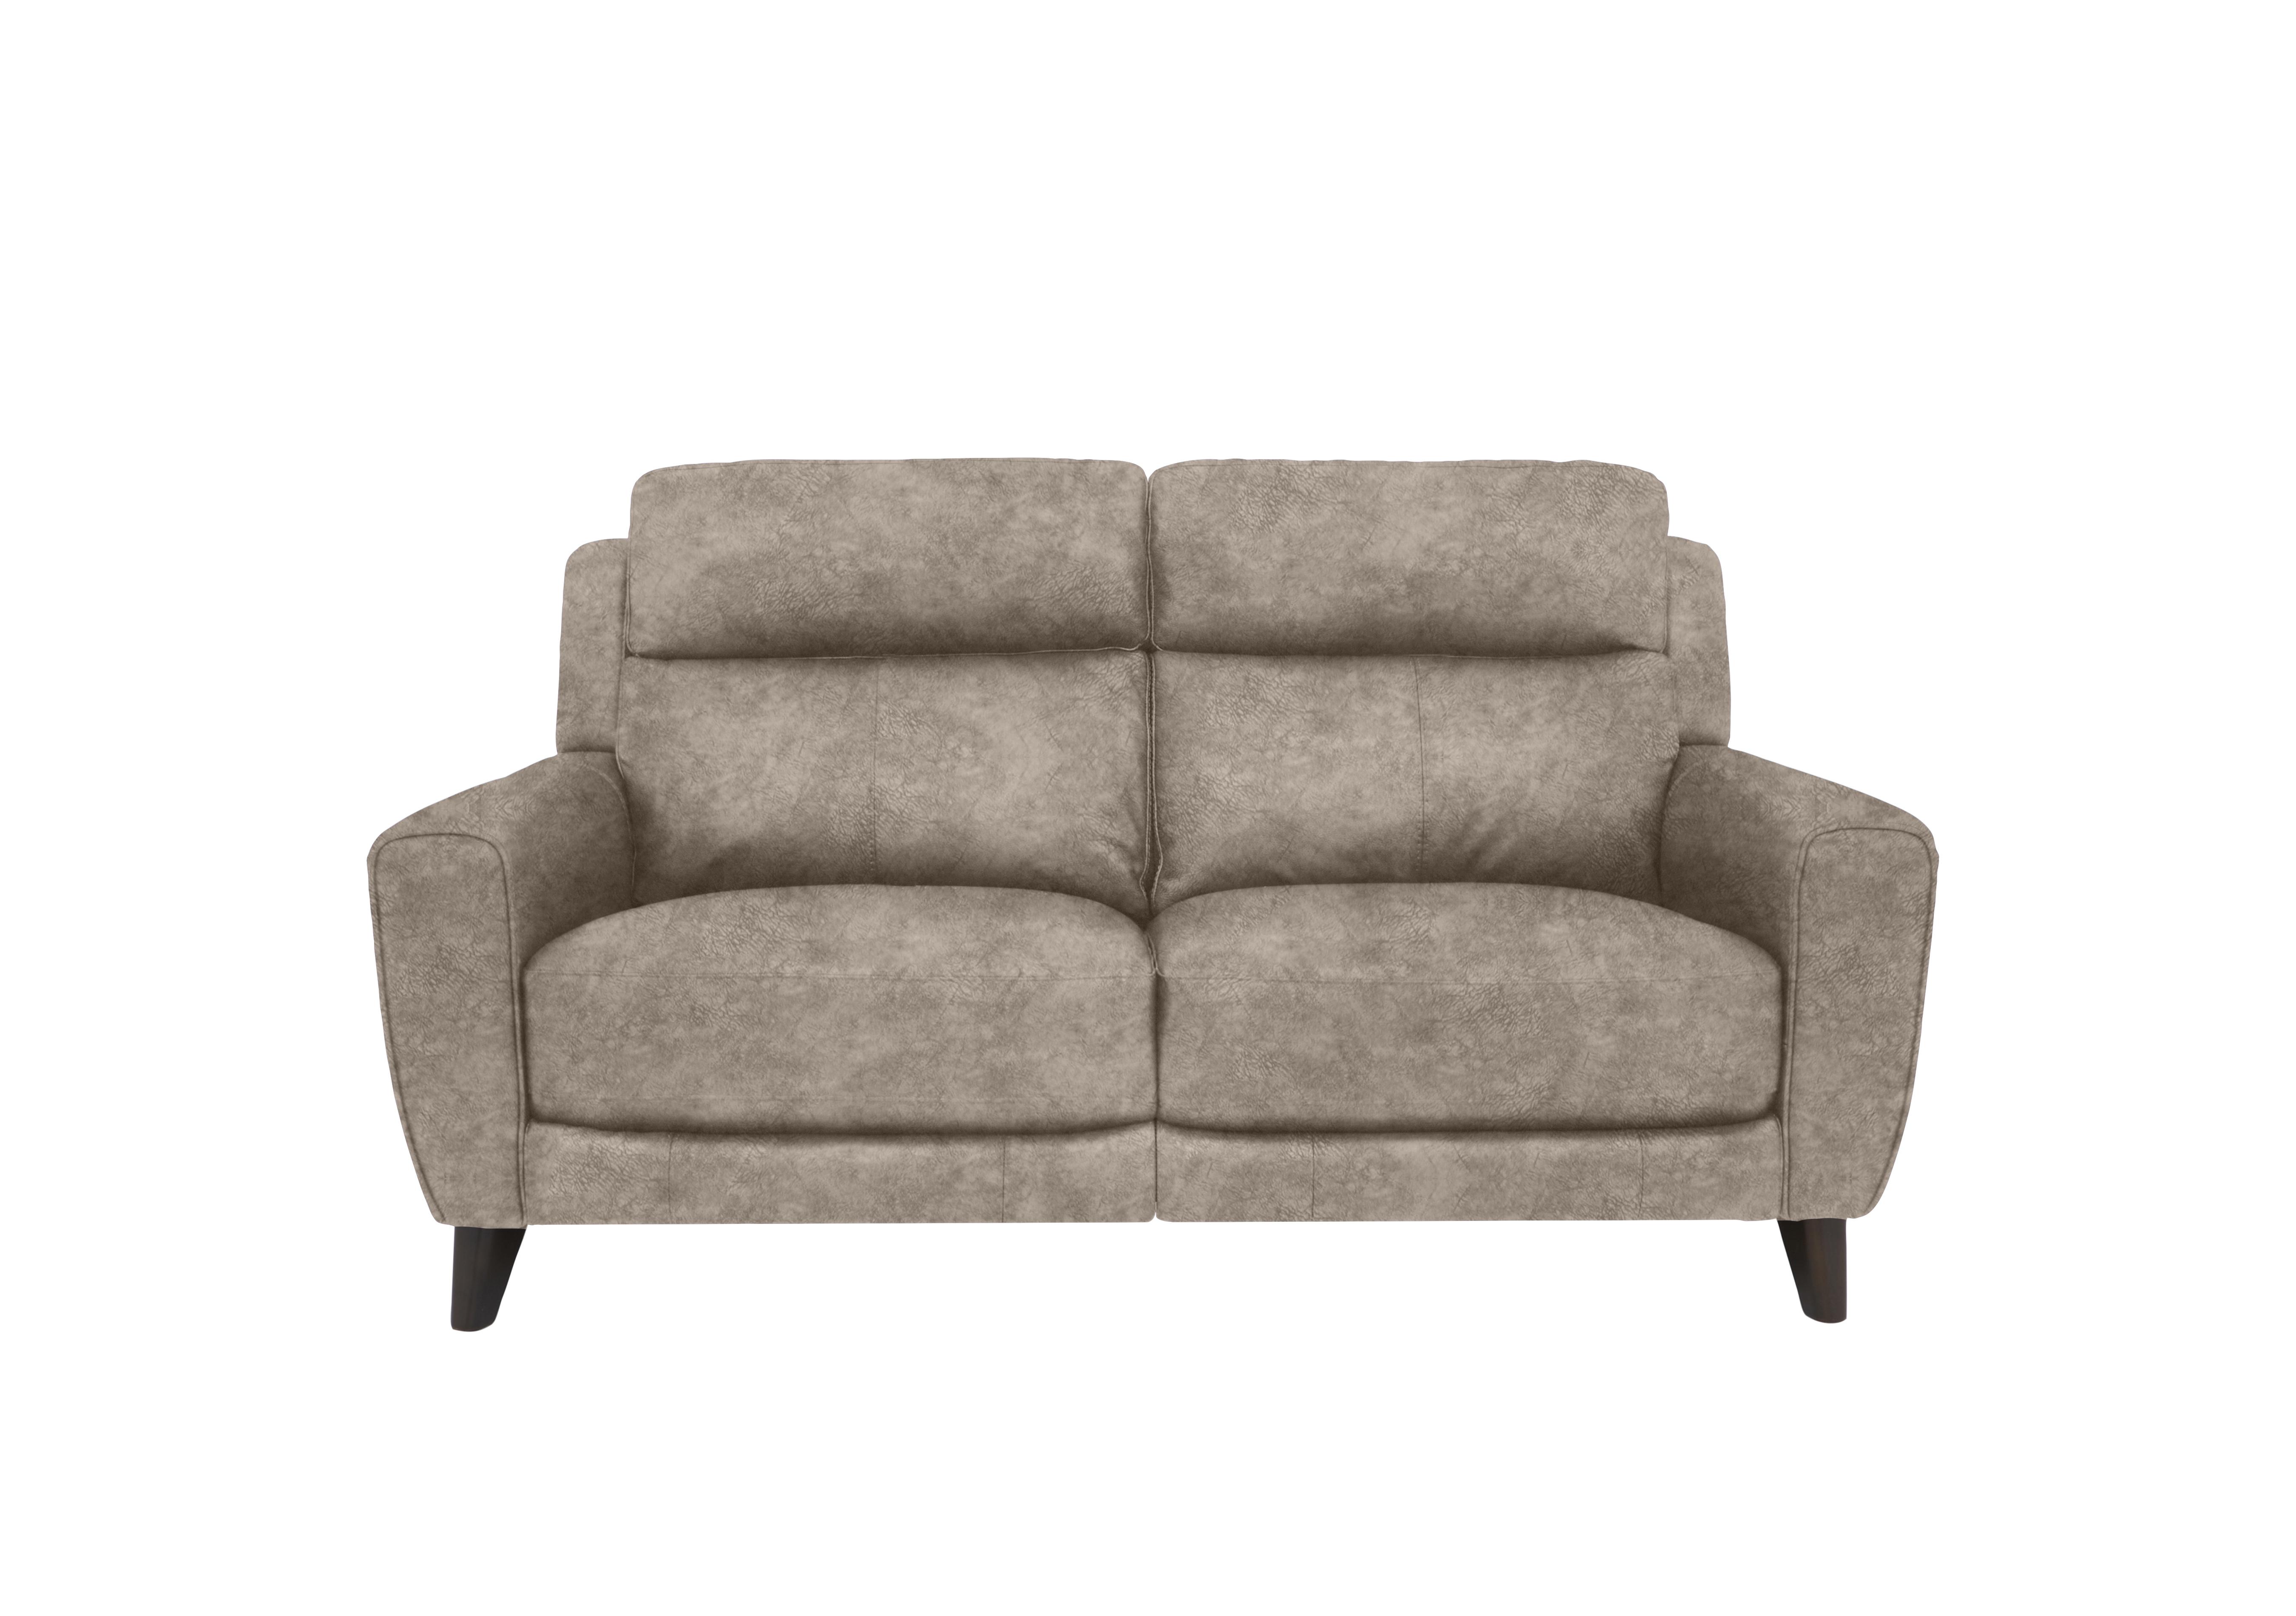 Zen 2 Seater Fabric Sofa in Bfa-Bnn-R29 Mink on Furniture Village